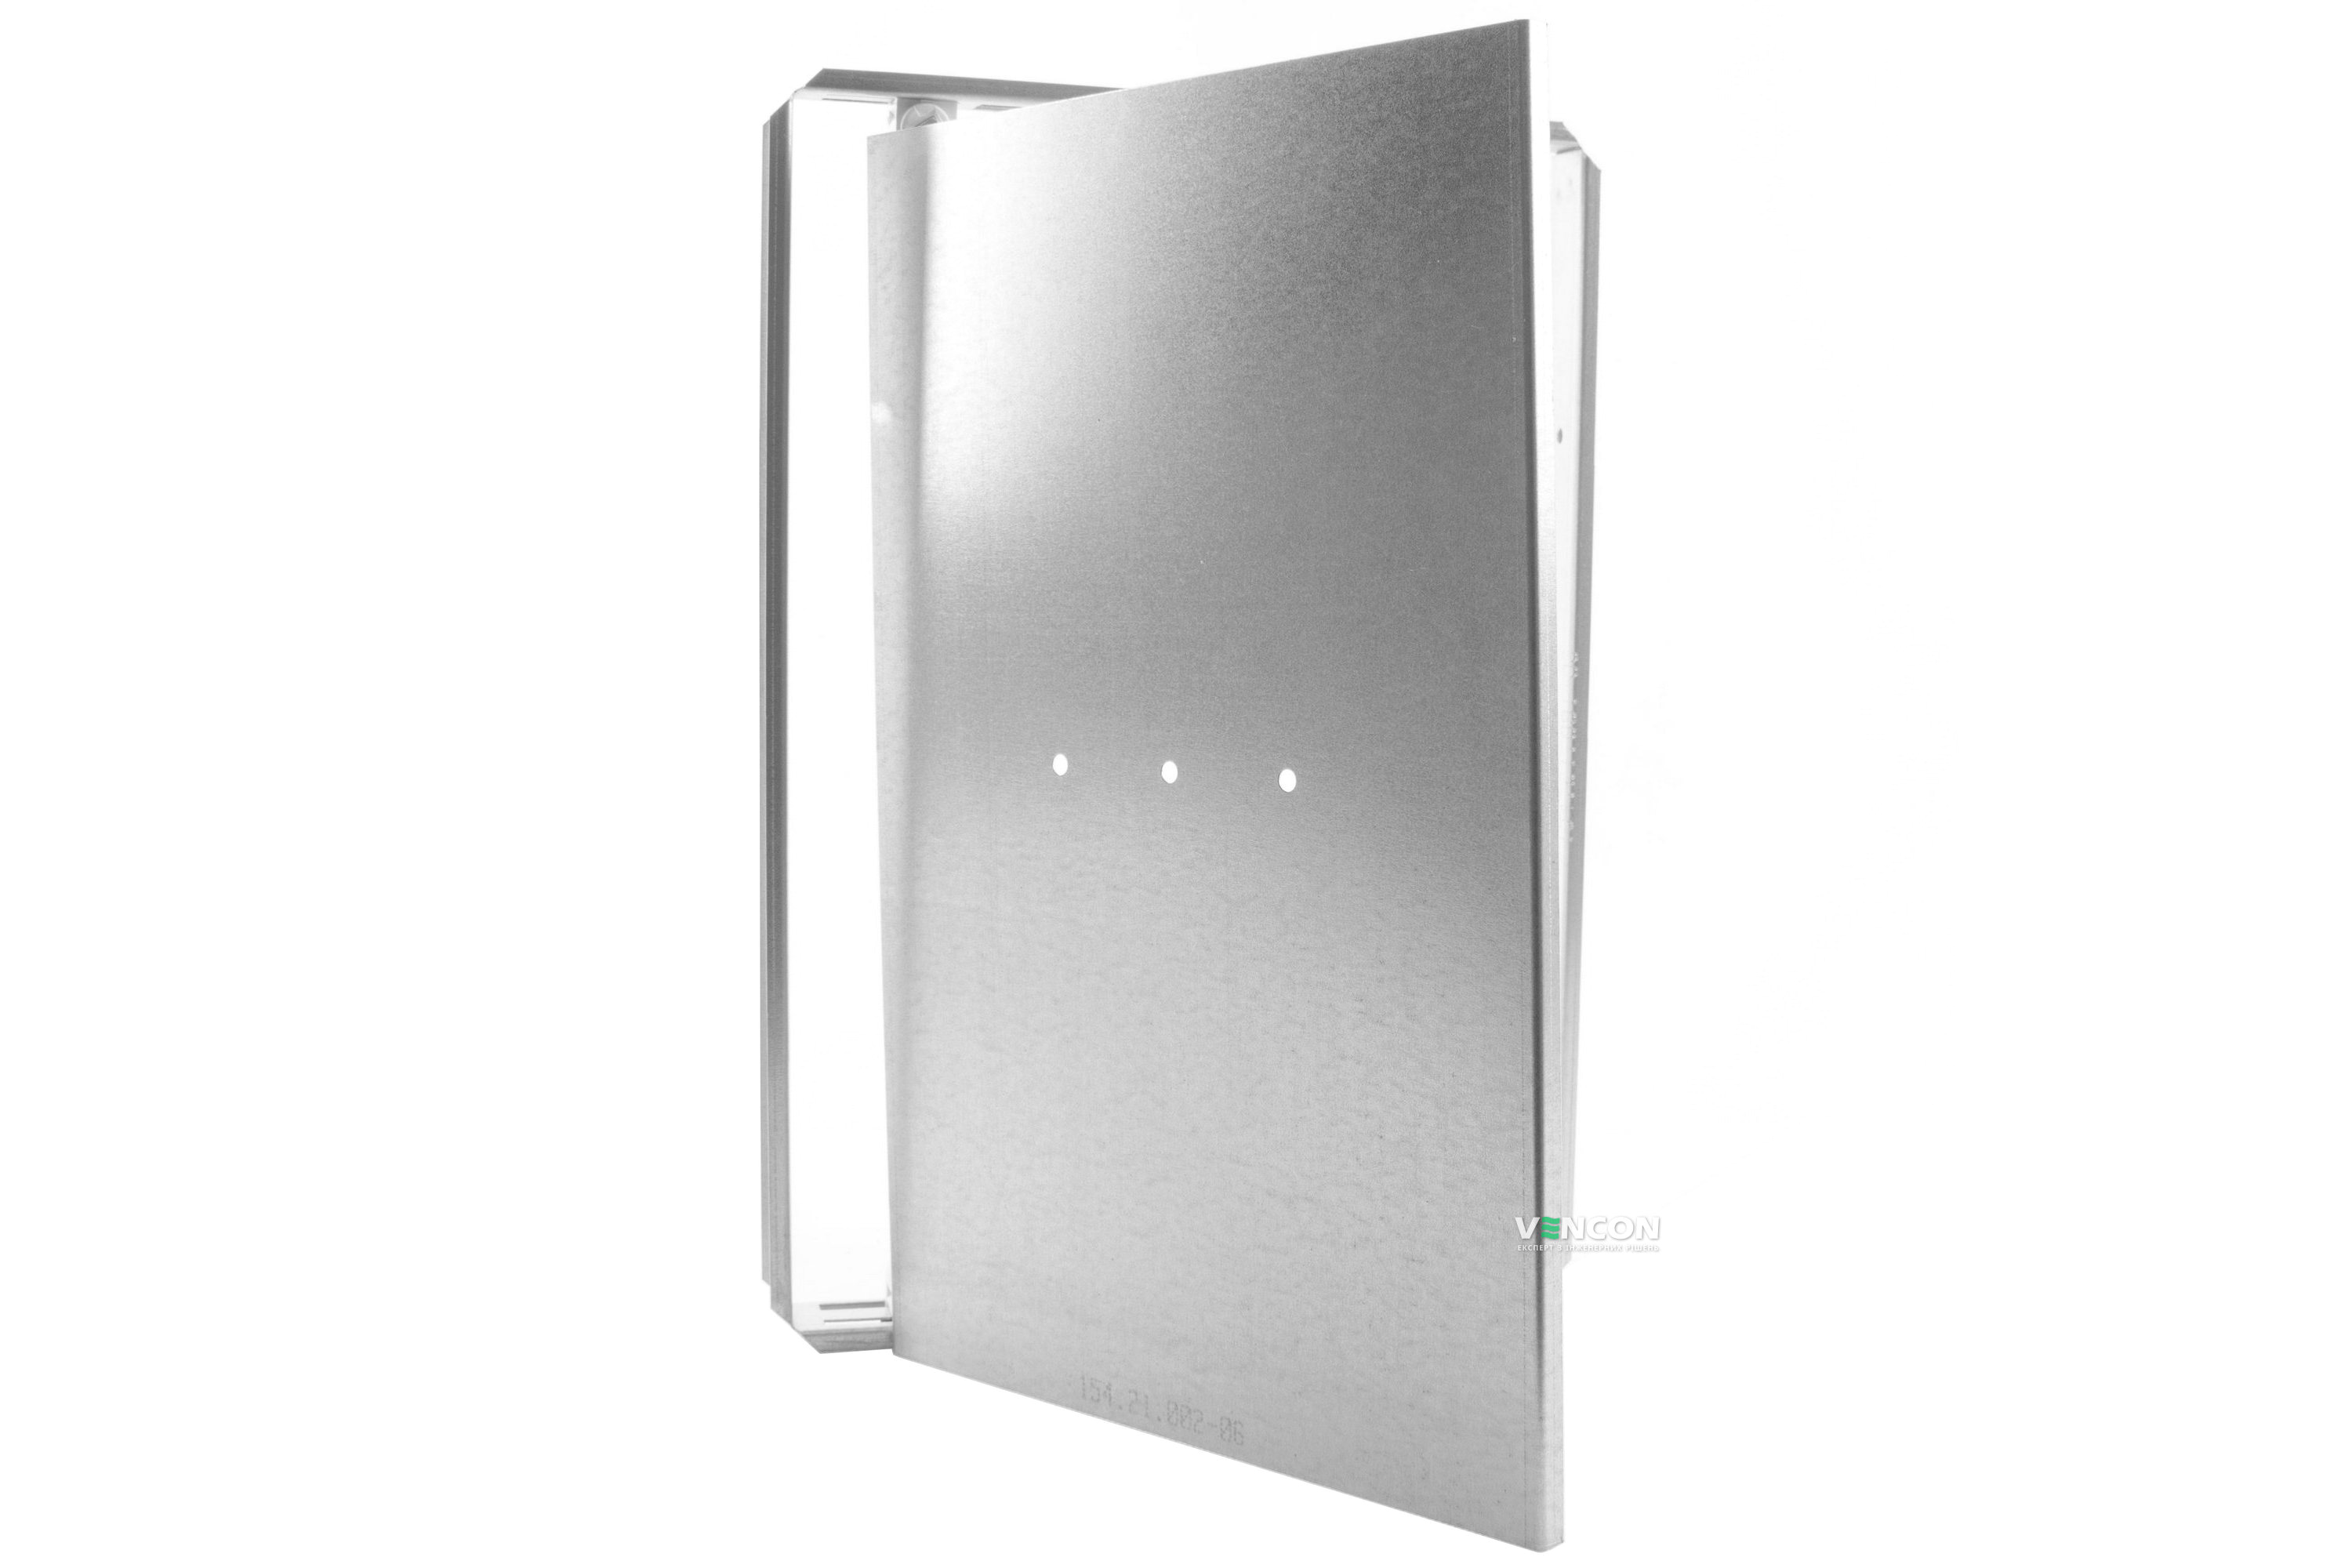 Дверца ревизионная Вентс ДКМ 200х300 цена 981 грн - фотография 2